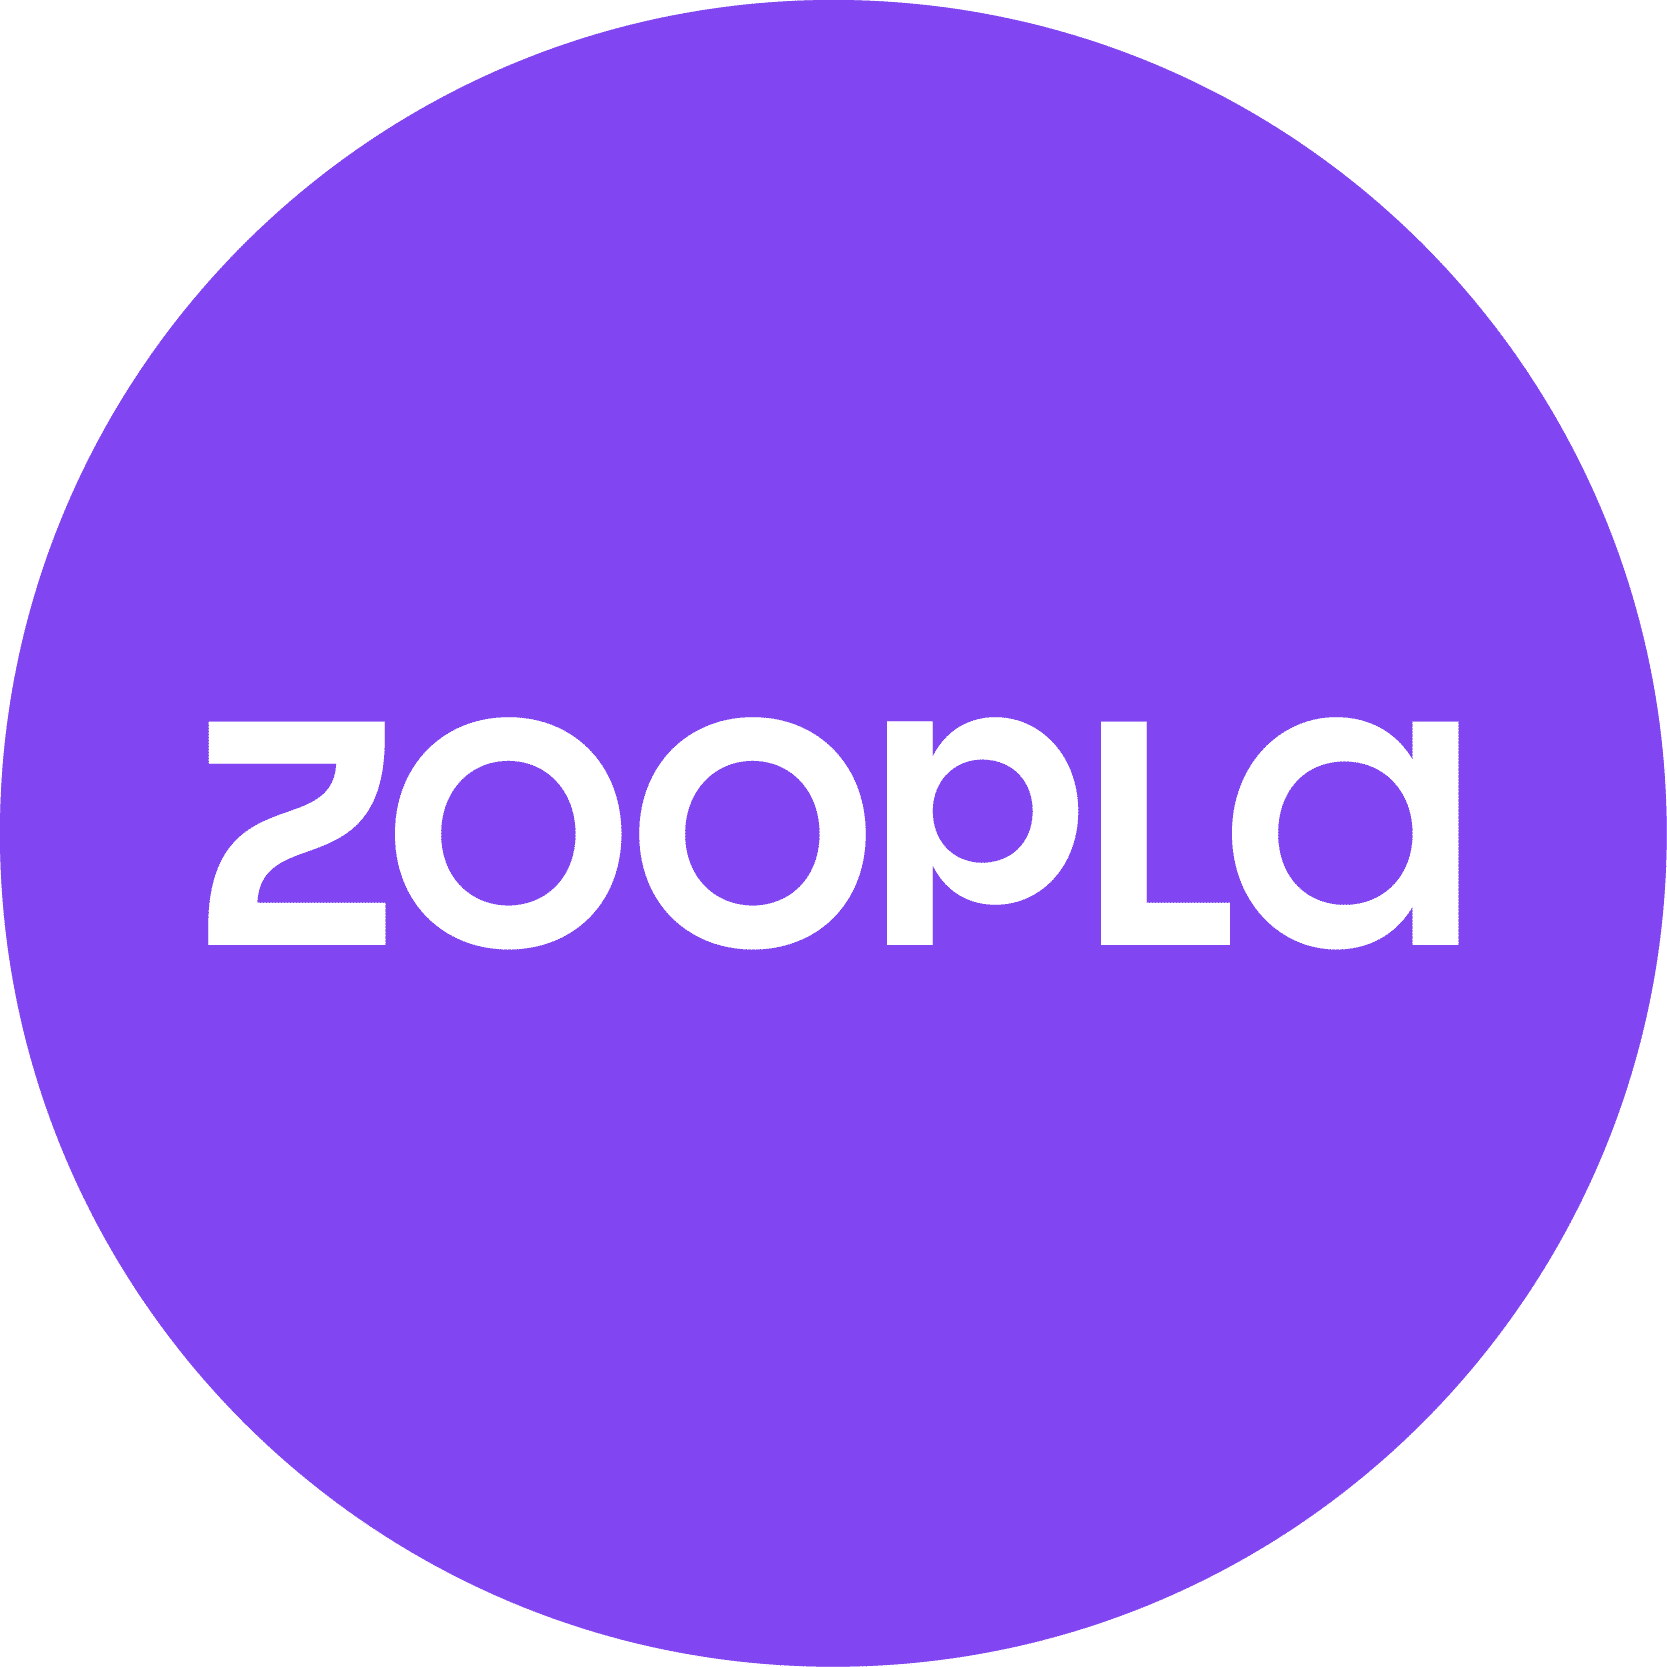 Zoopla